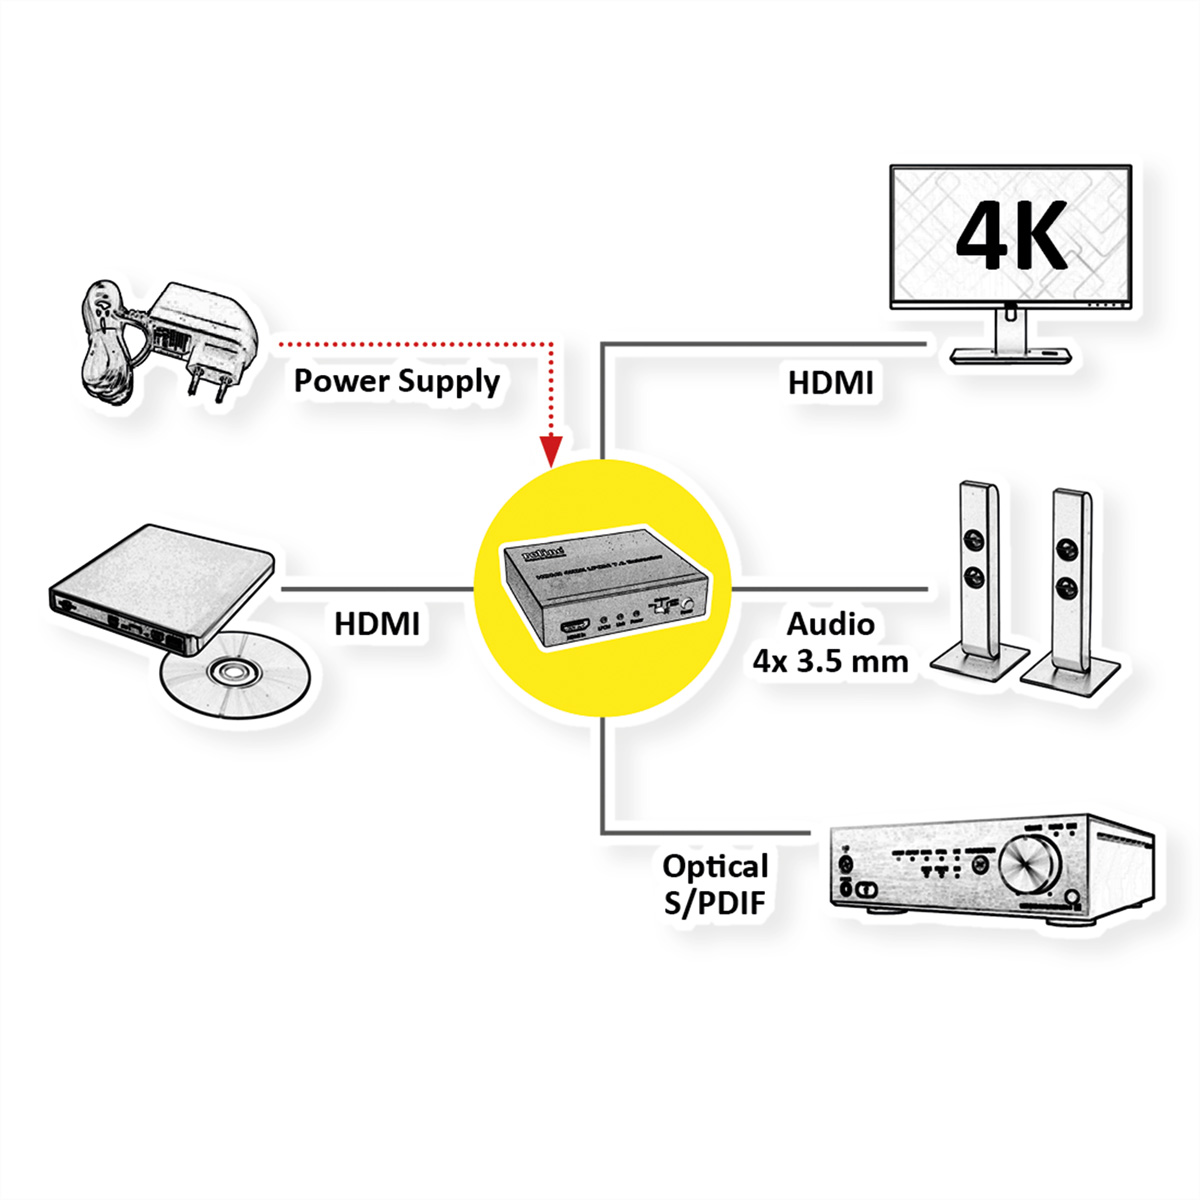 ROLINE HDMI 4K Audio Extraktor Extraktor Audio 7.1 LPCM HDMI